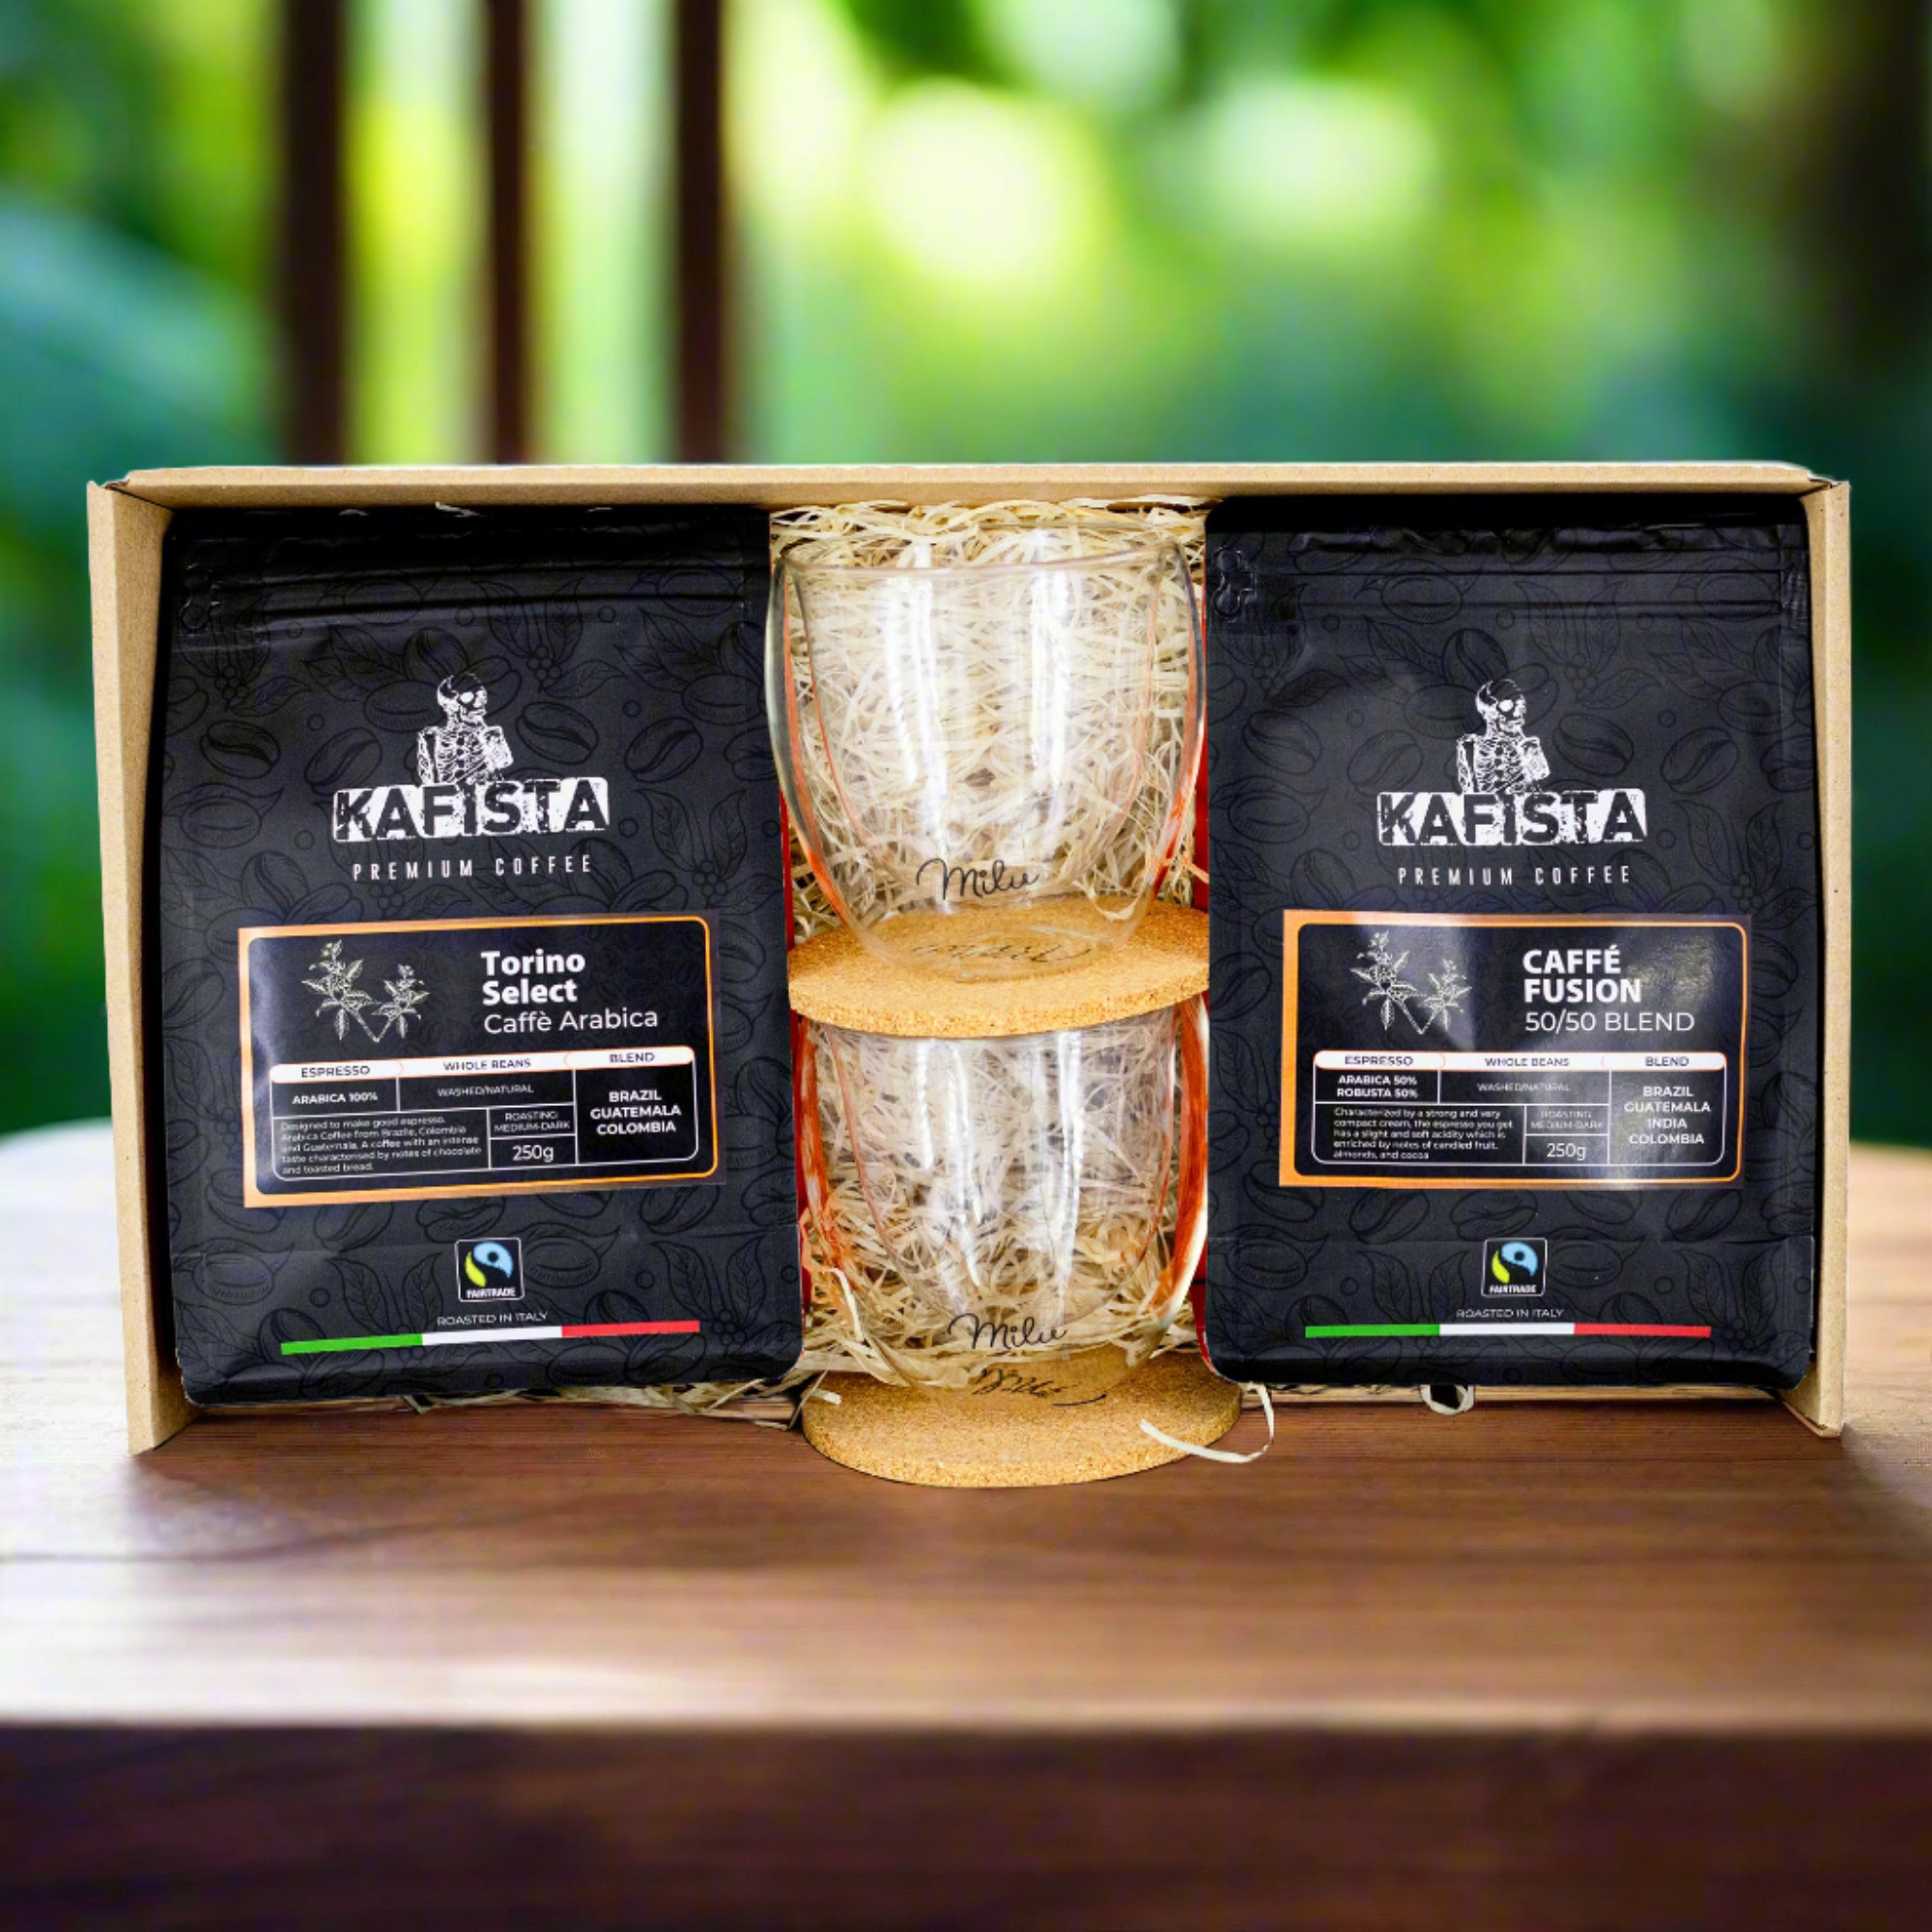 Coffee Box 2 - Dárkový balíček s kávou Kafista a sadou termosklenic - zrnková káva pražená v Itálii